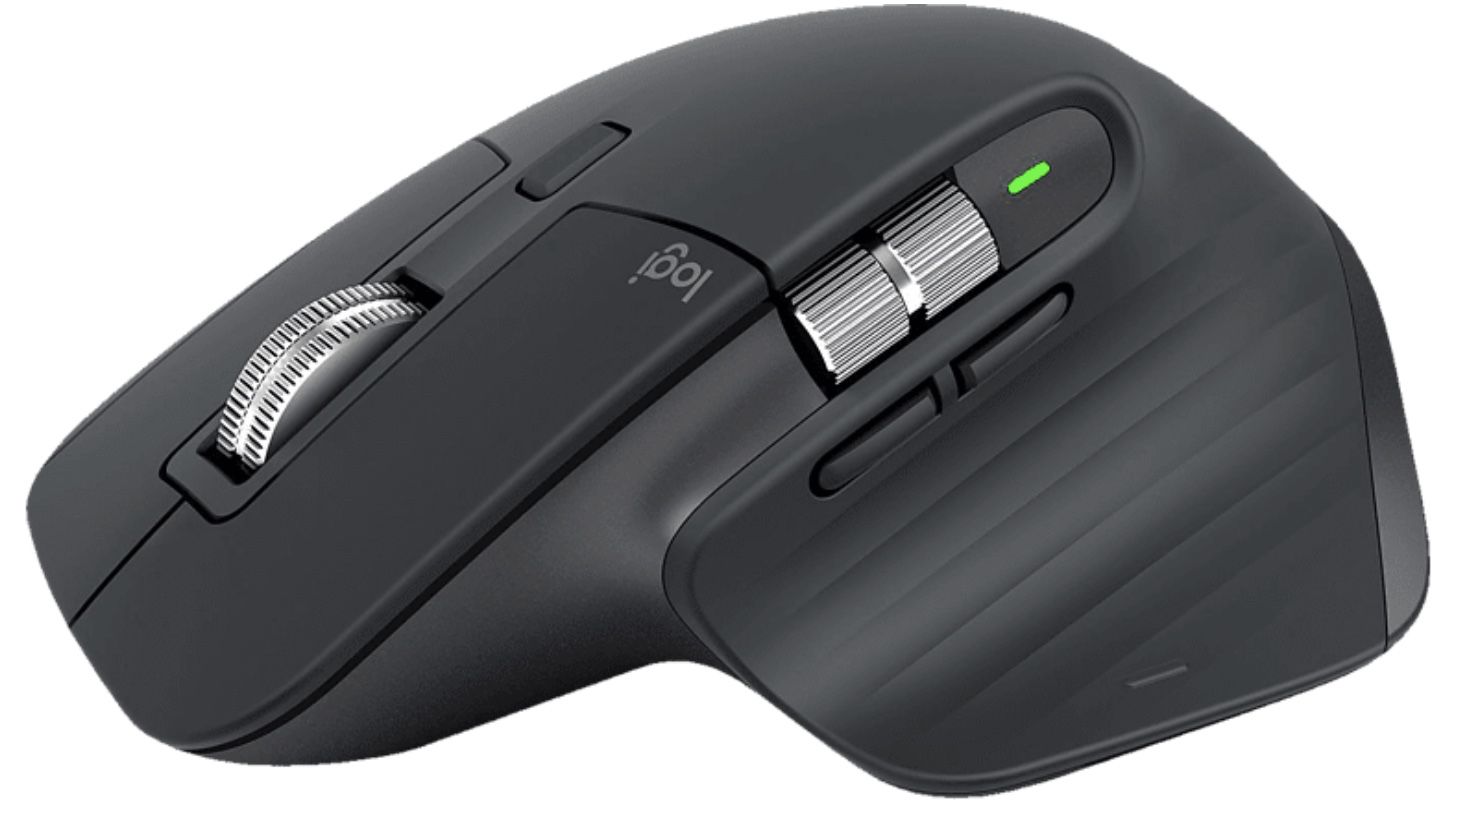 Logitech MX Master 3 Advanced Maus   Business Edition für 62,99€ (statt 110€)